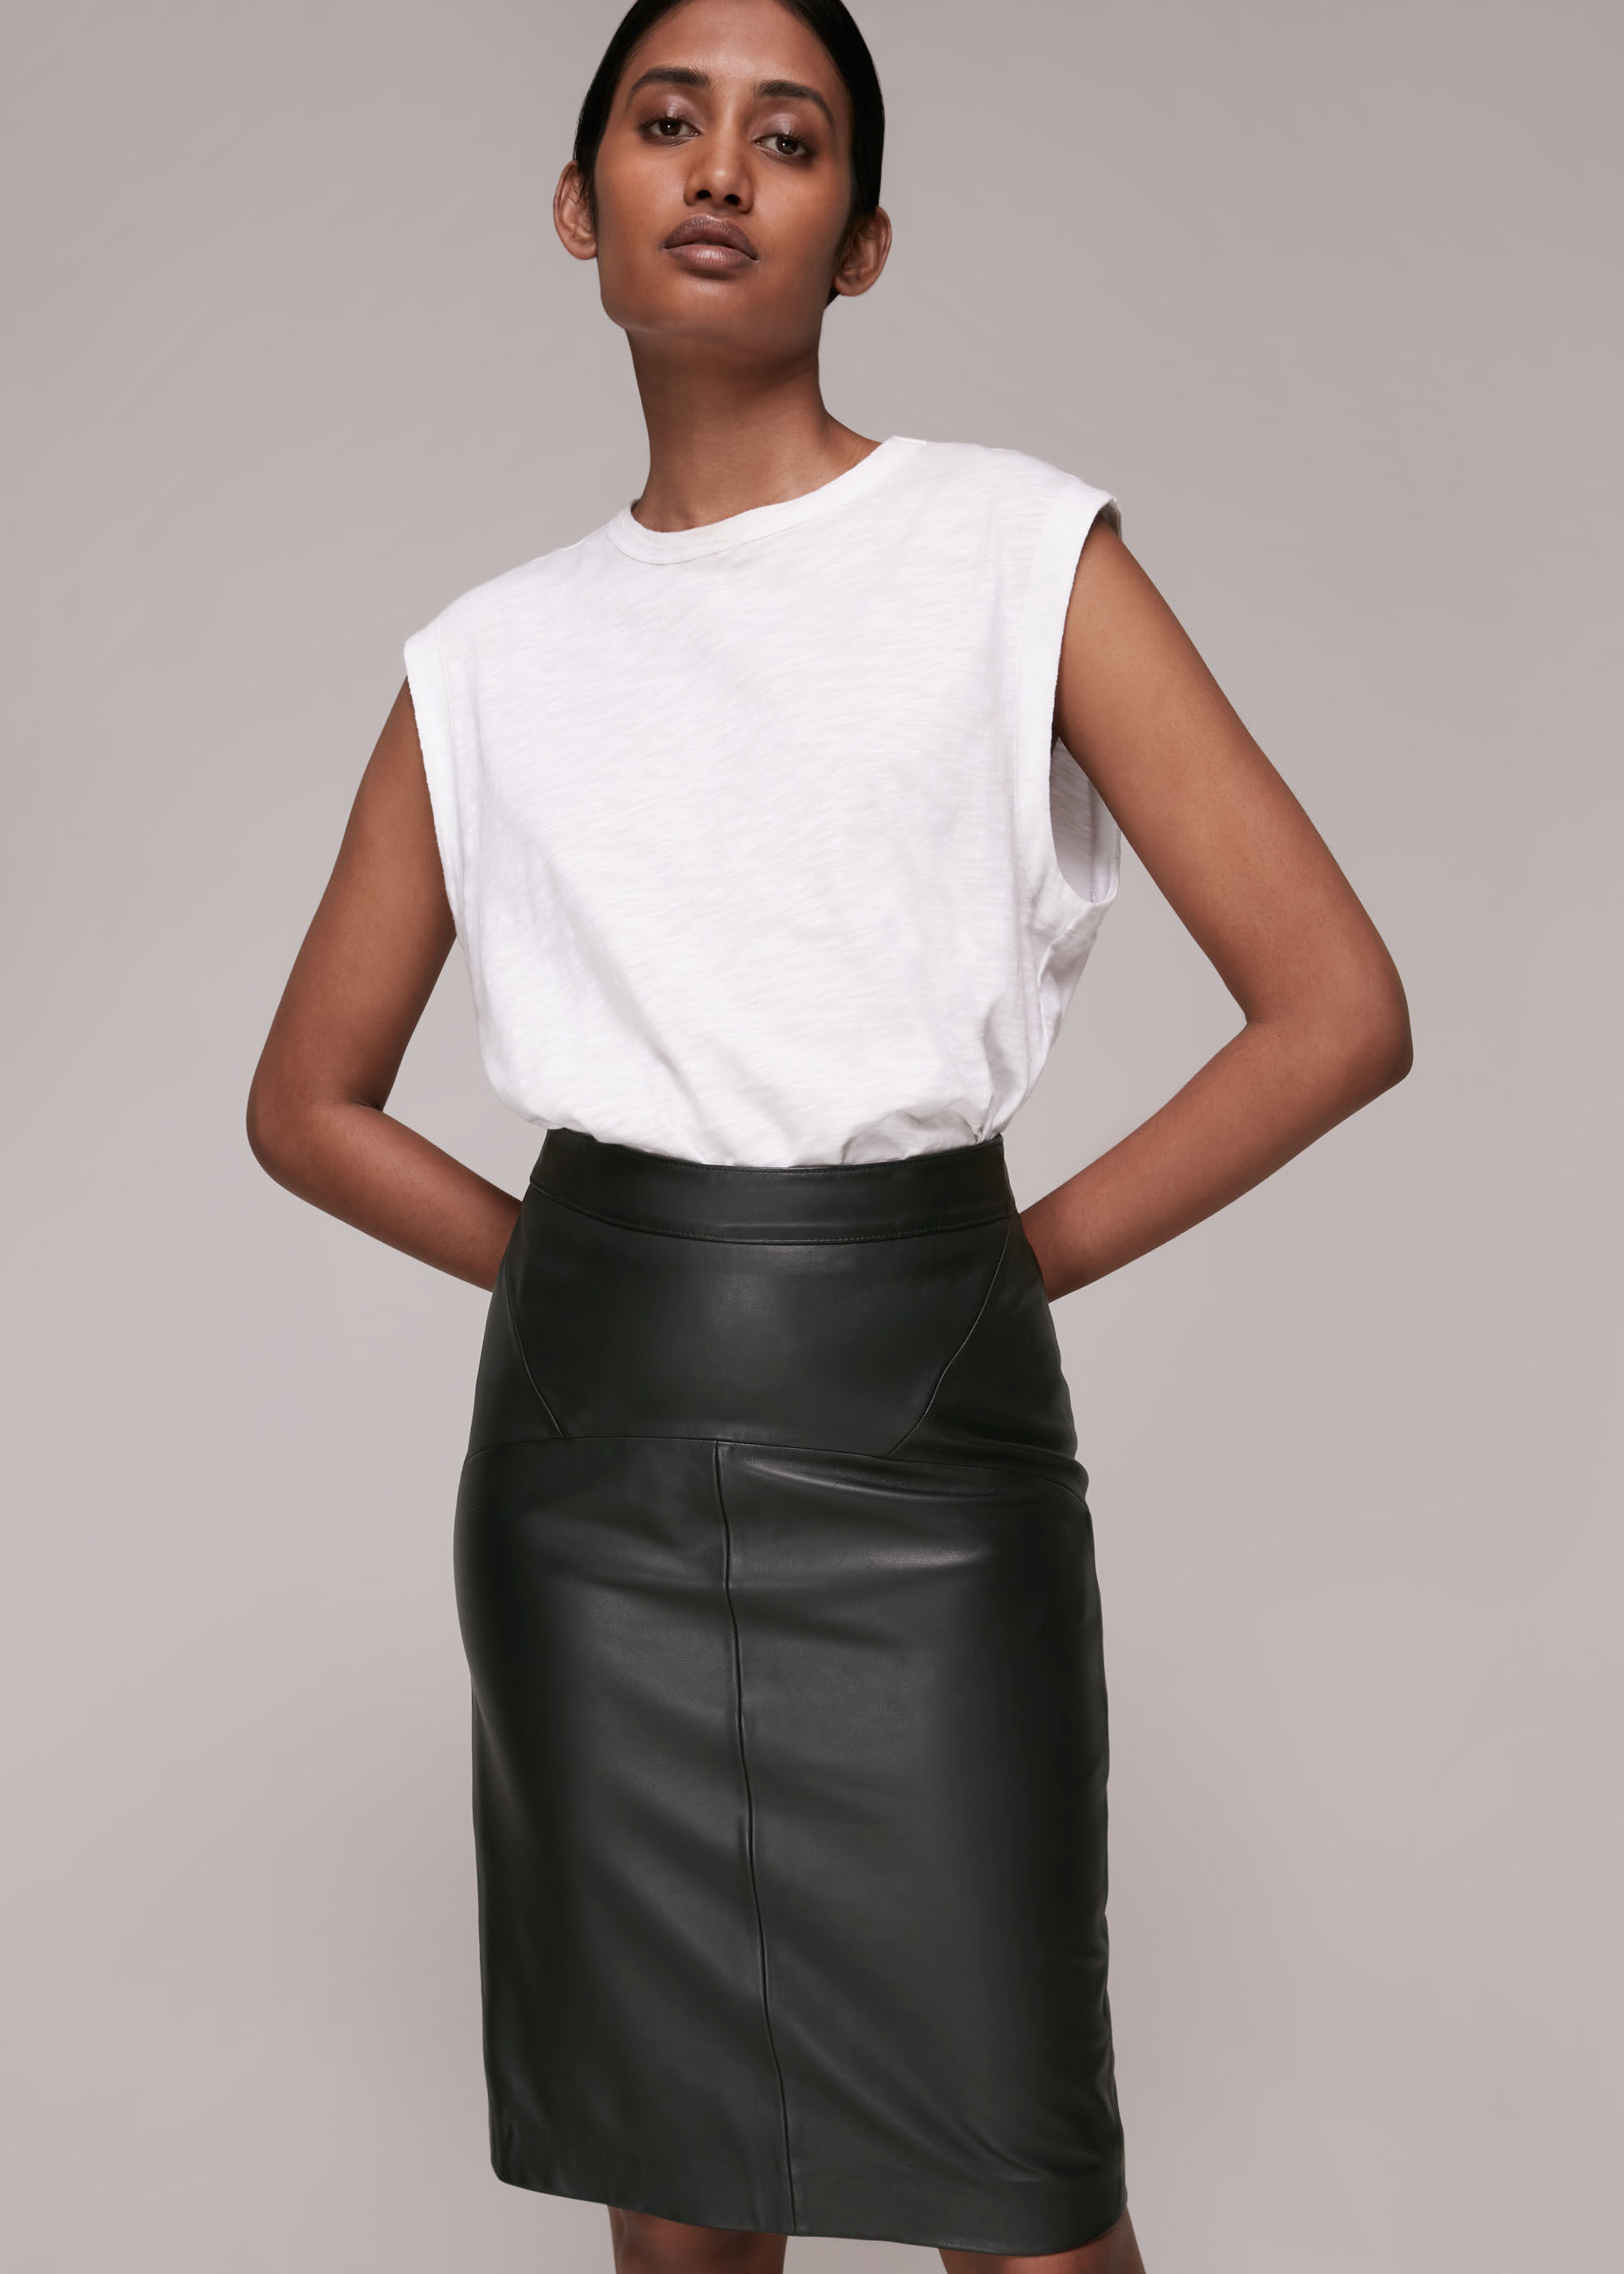 Vero Moda | Skirts | Vero Moda Henna High Waist Short Frill Skirt | Poshmark